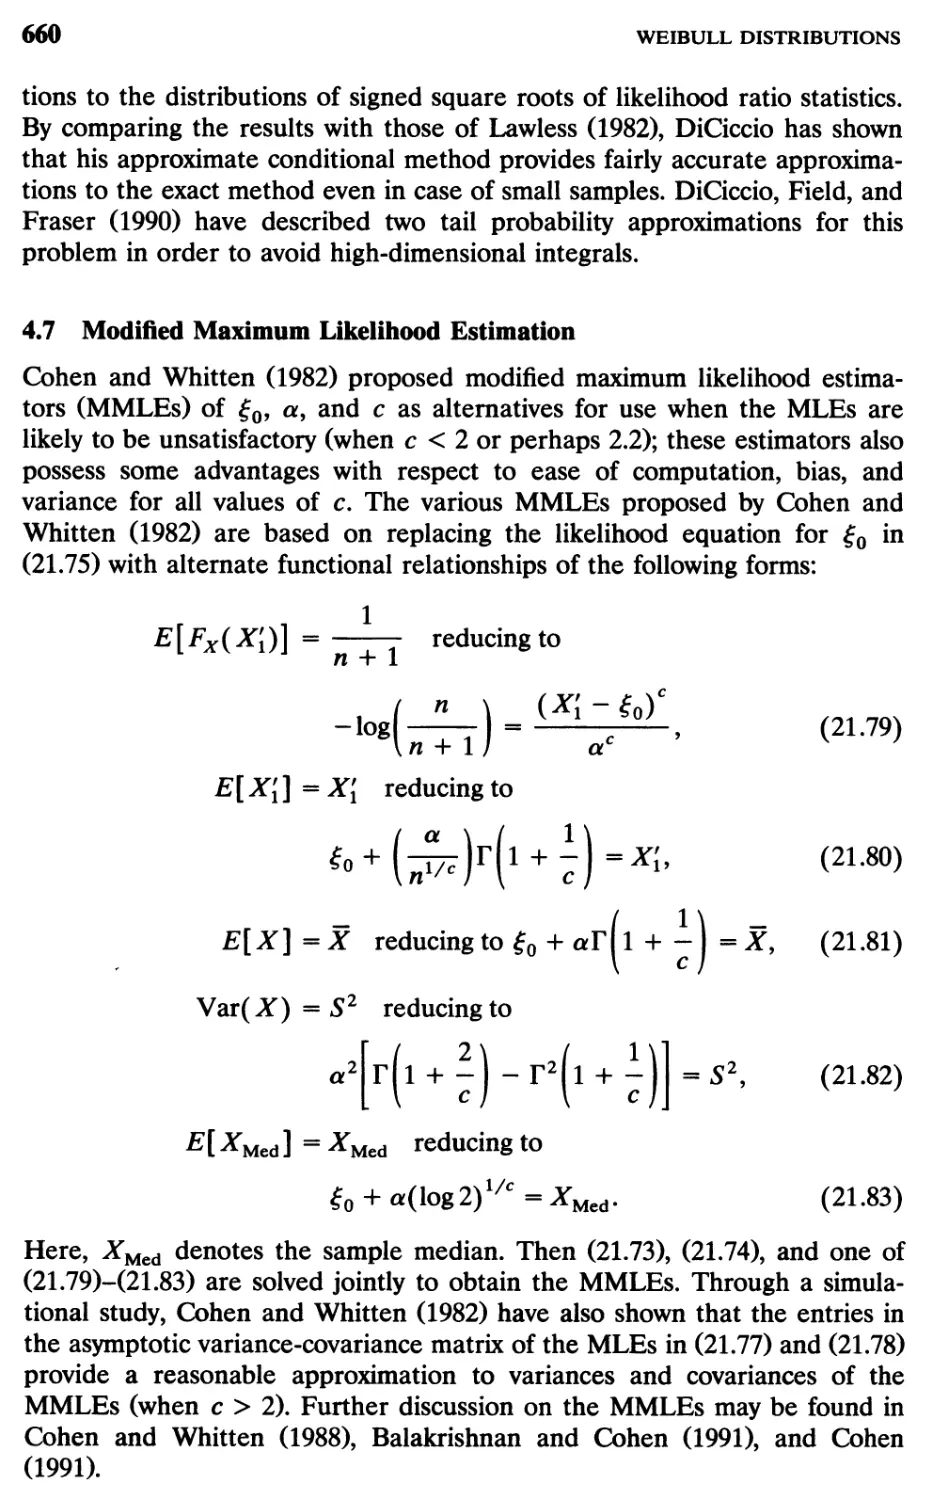 4.7 Modified Maximum Likelihood Estimation, 660